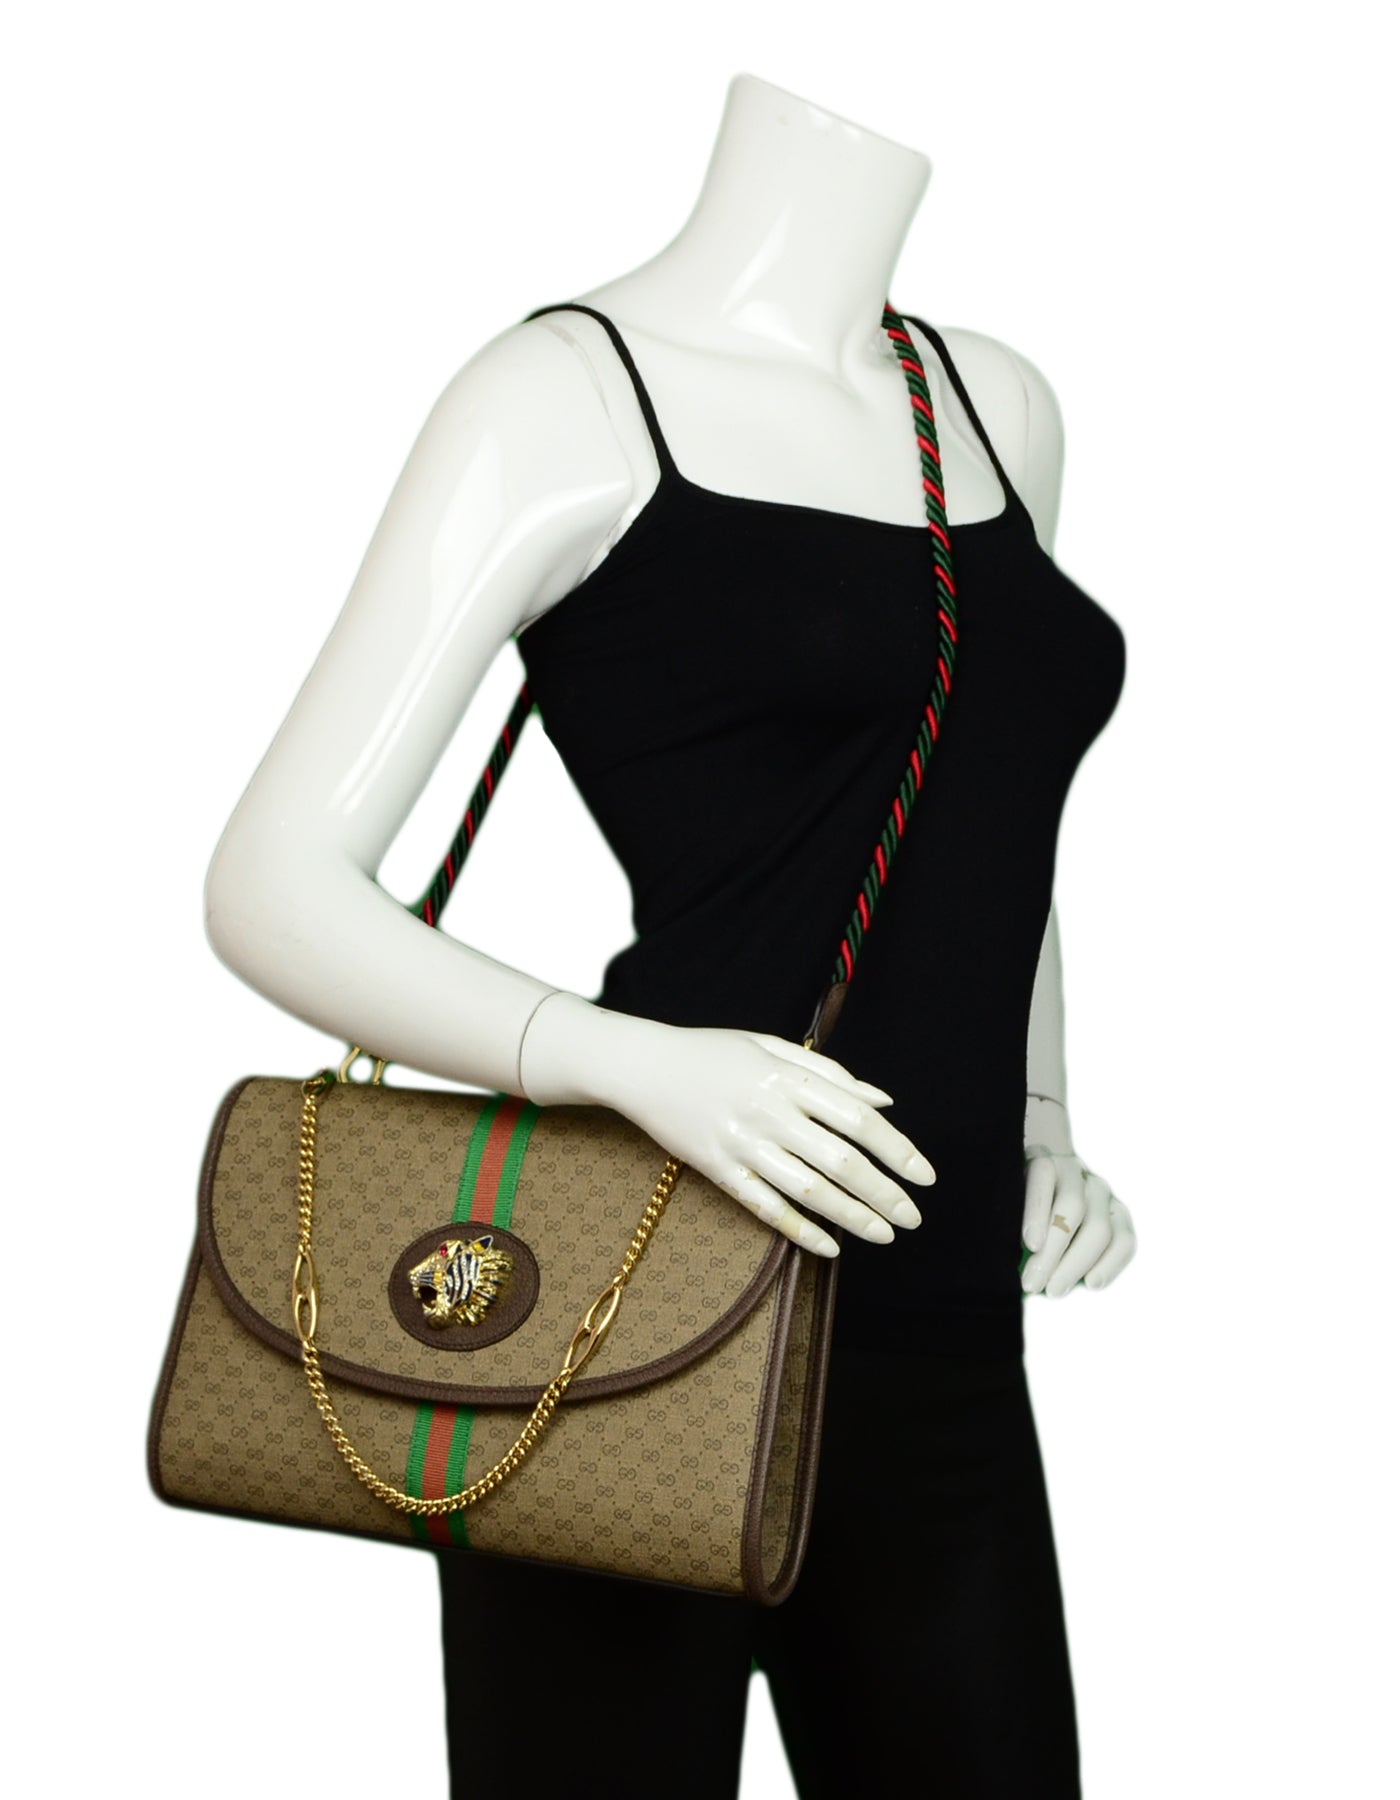 Gucci Monogram Web Medium Rajah Shoulder/Crossbody Bag